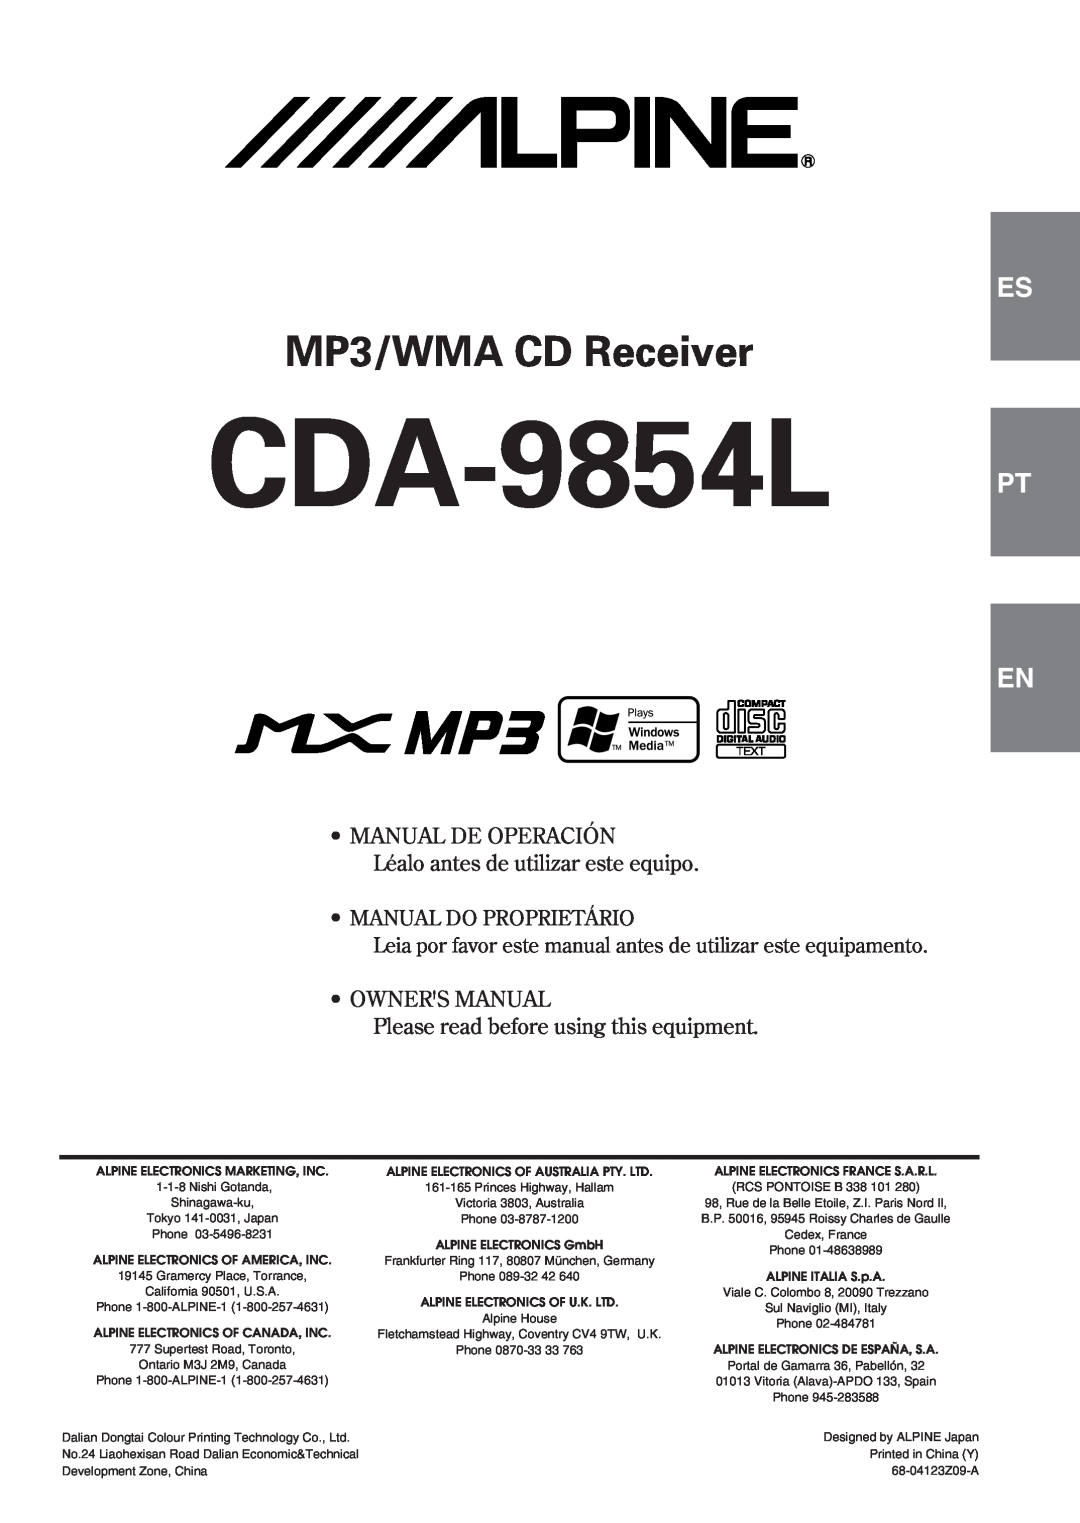 Alpine 68-04123Z09-A owner manual CDA-9854L PT, MP3/WMA CD Receiver, • Manual De Operación, • Owners Manual, Shinagawa-ku 